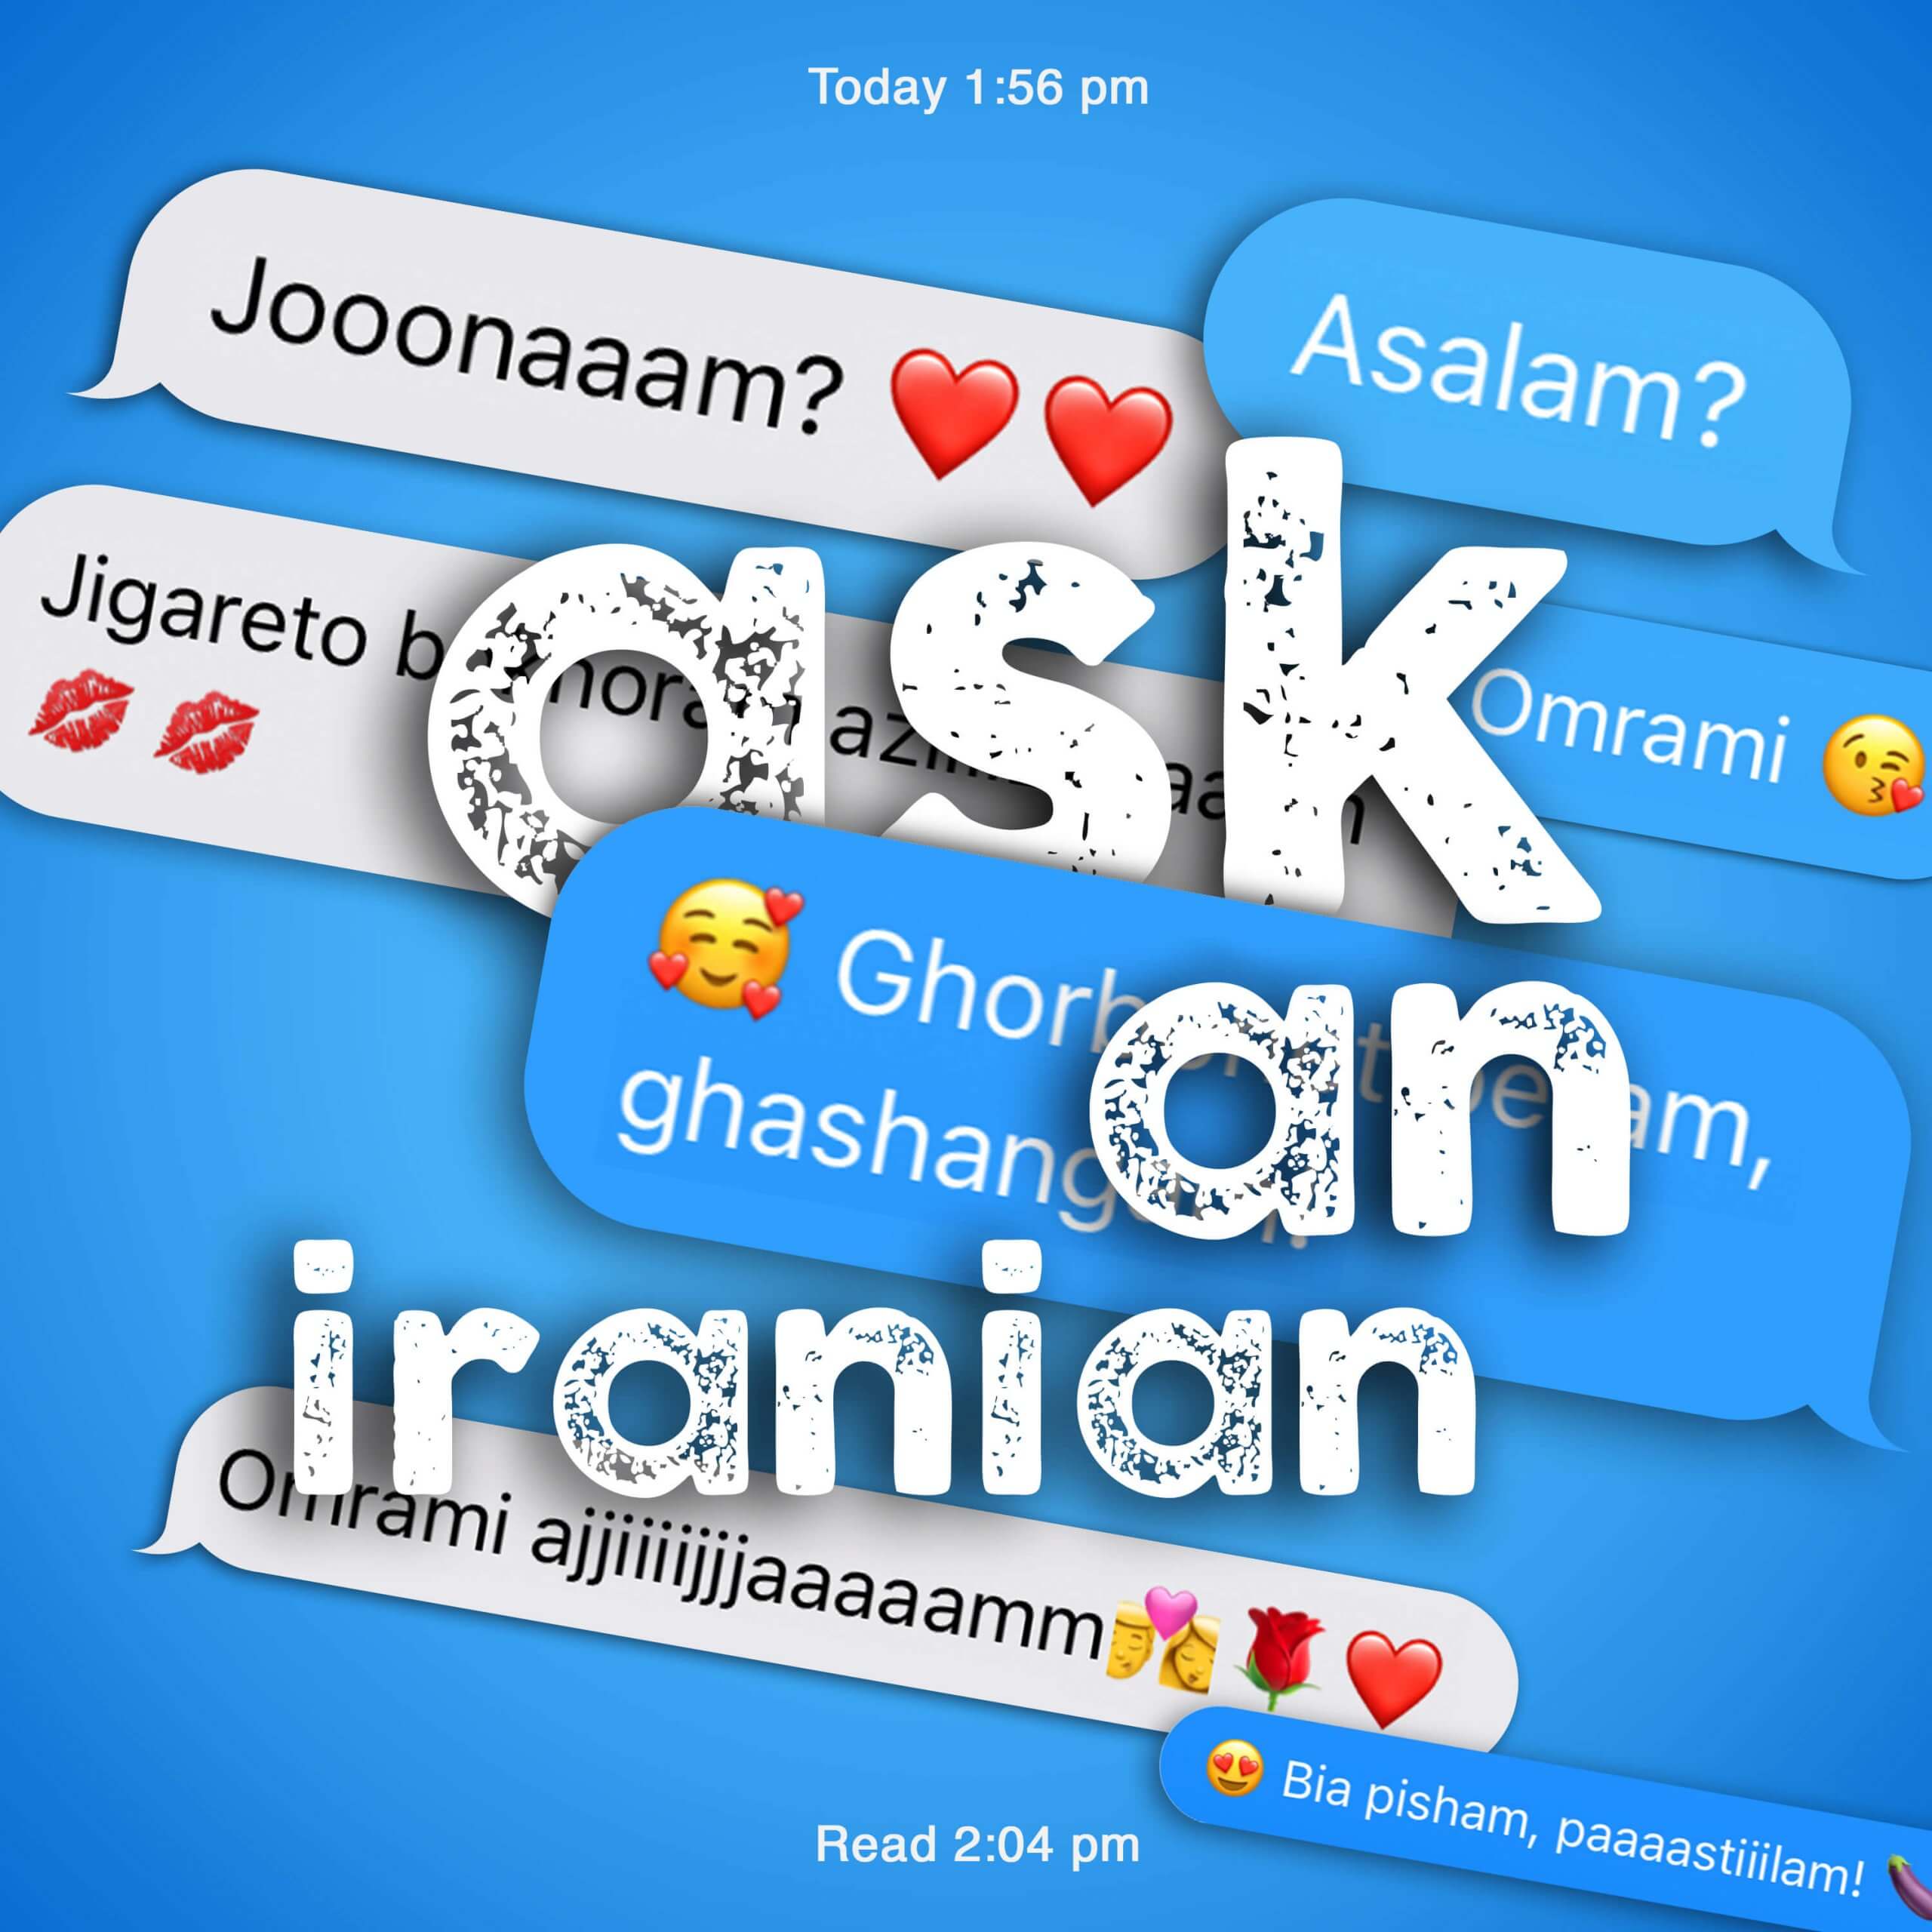 How do I sweet-talk an Iranian?